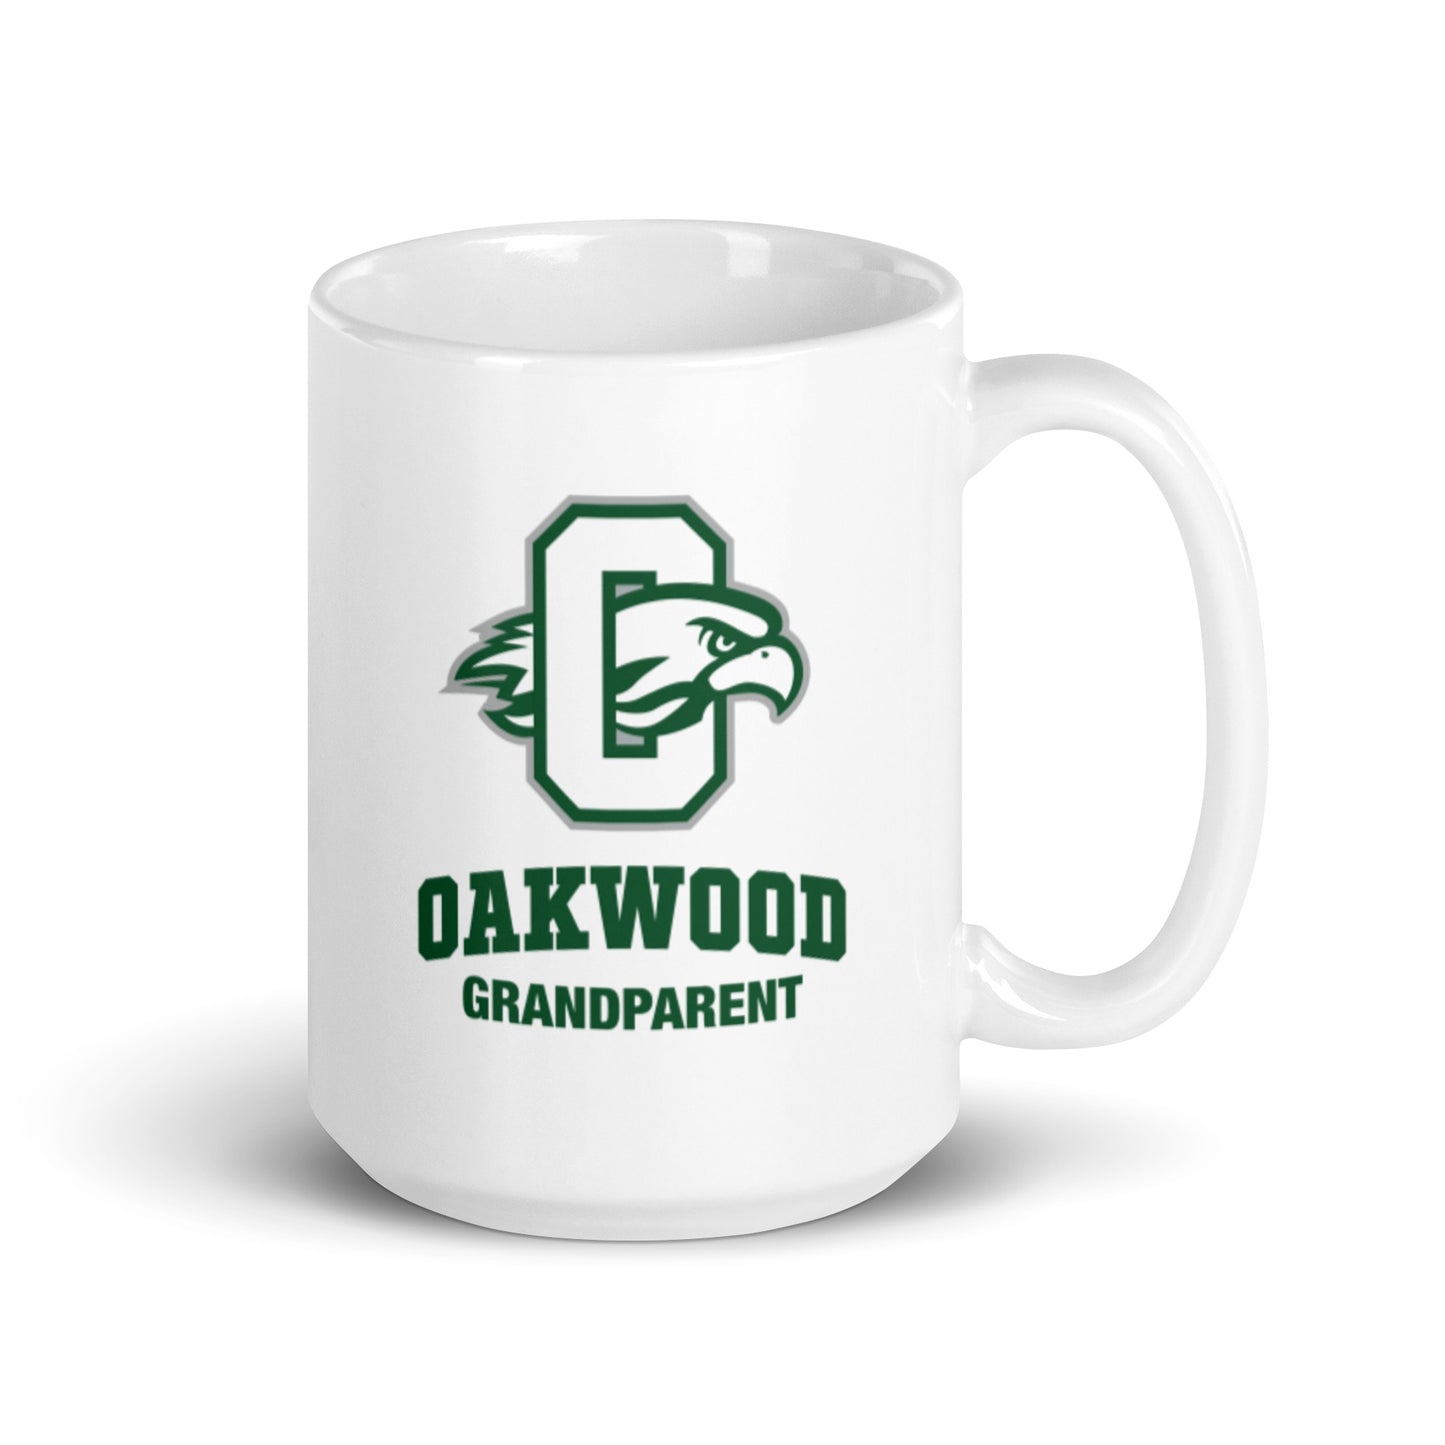 Oakwood Grandparent Mug